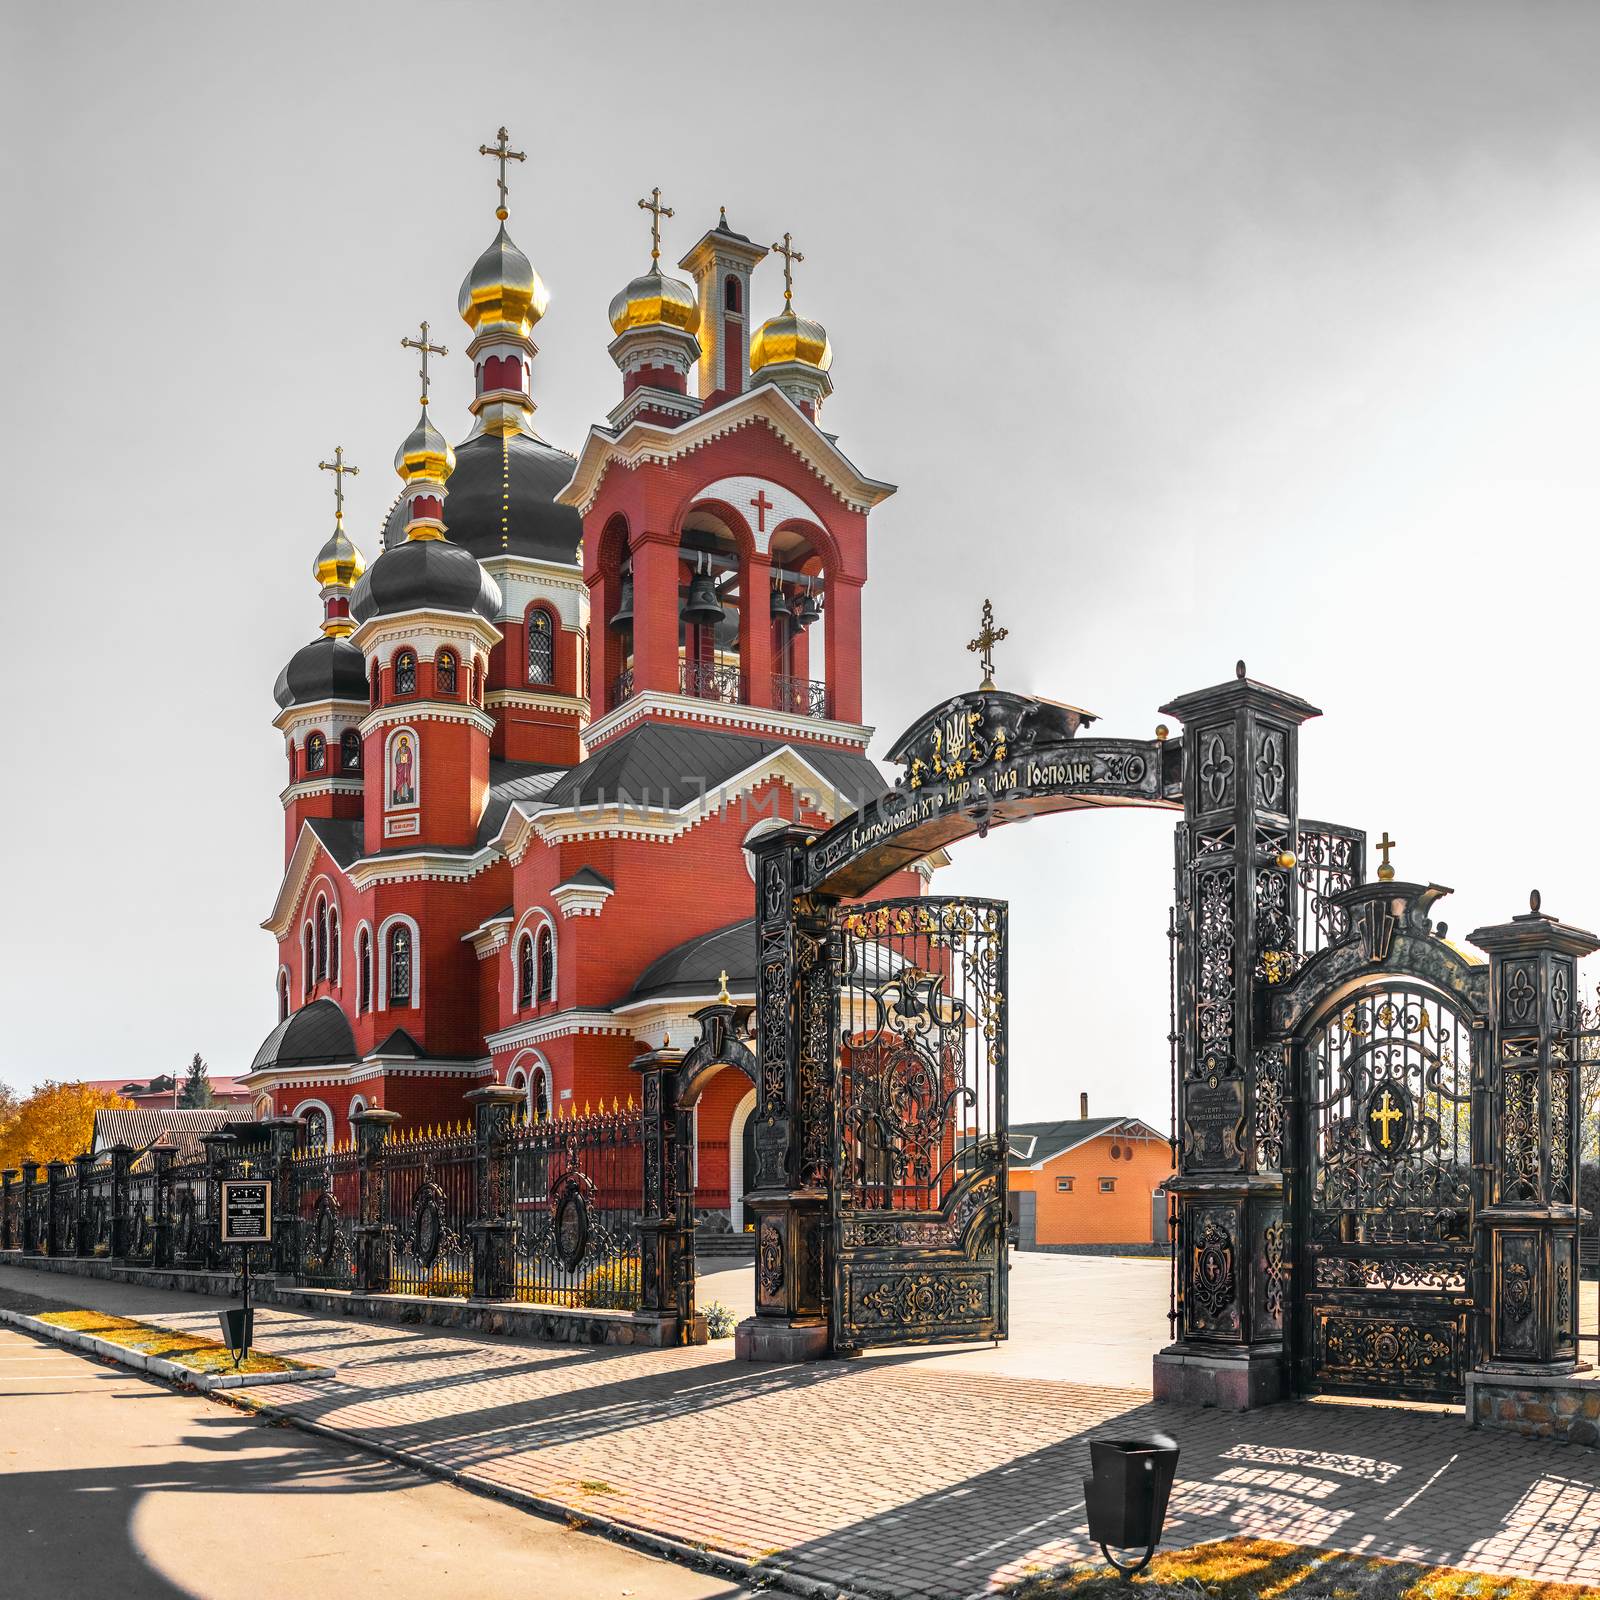 Talne, Ukraine 10.19.2019. Ukrainian Orthodox St Peter and Paul Church of the Kyiv Patriarchate in Talne, Ukraine